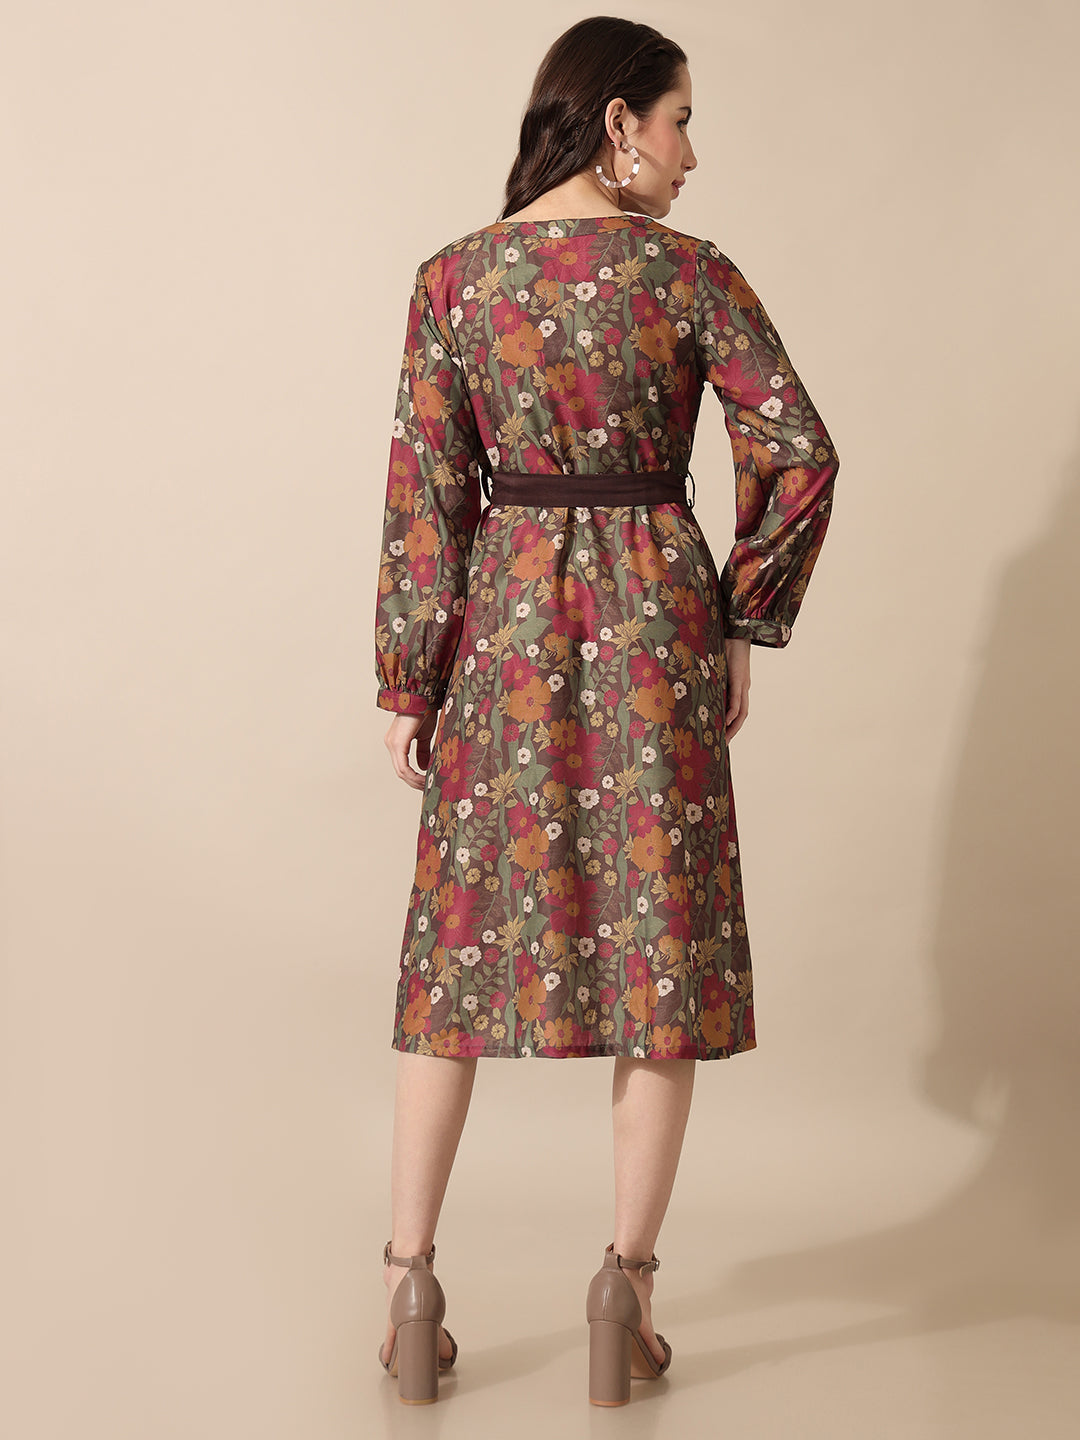 Florette Brown Printed Dress